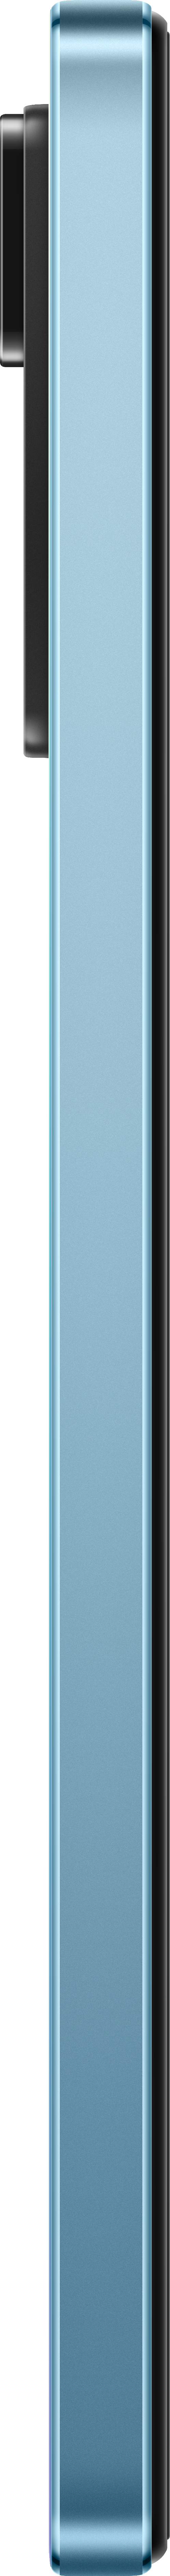 XIAOMI Redmi Note 11 Blue Pro GB Dual 128 SIM Star